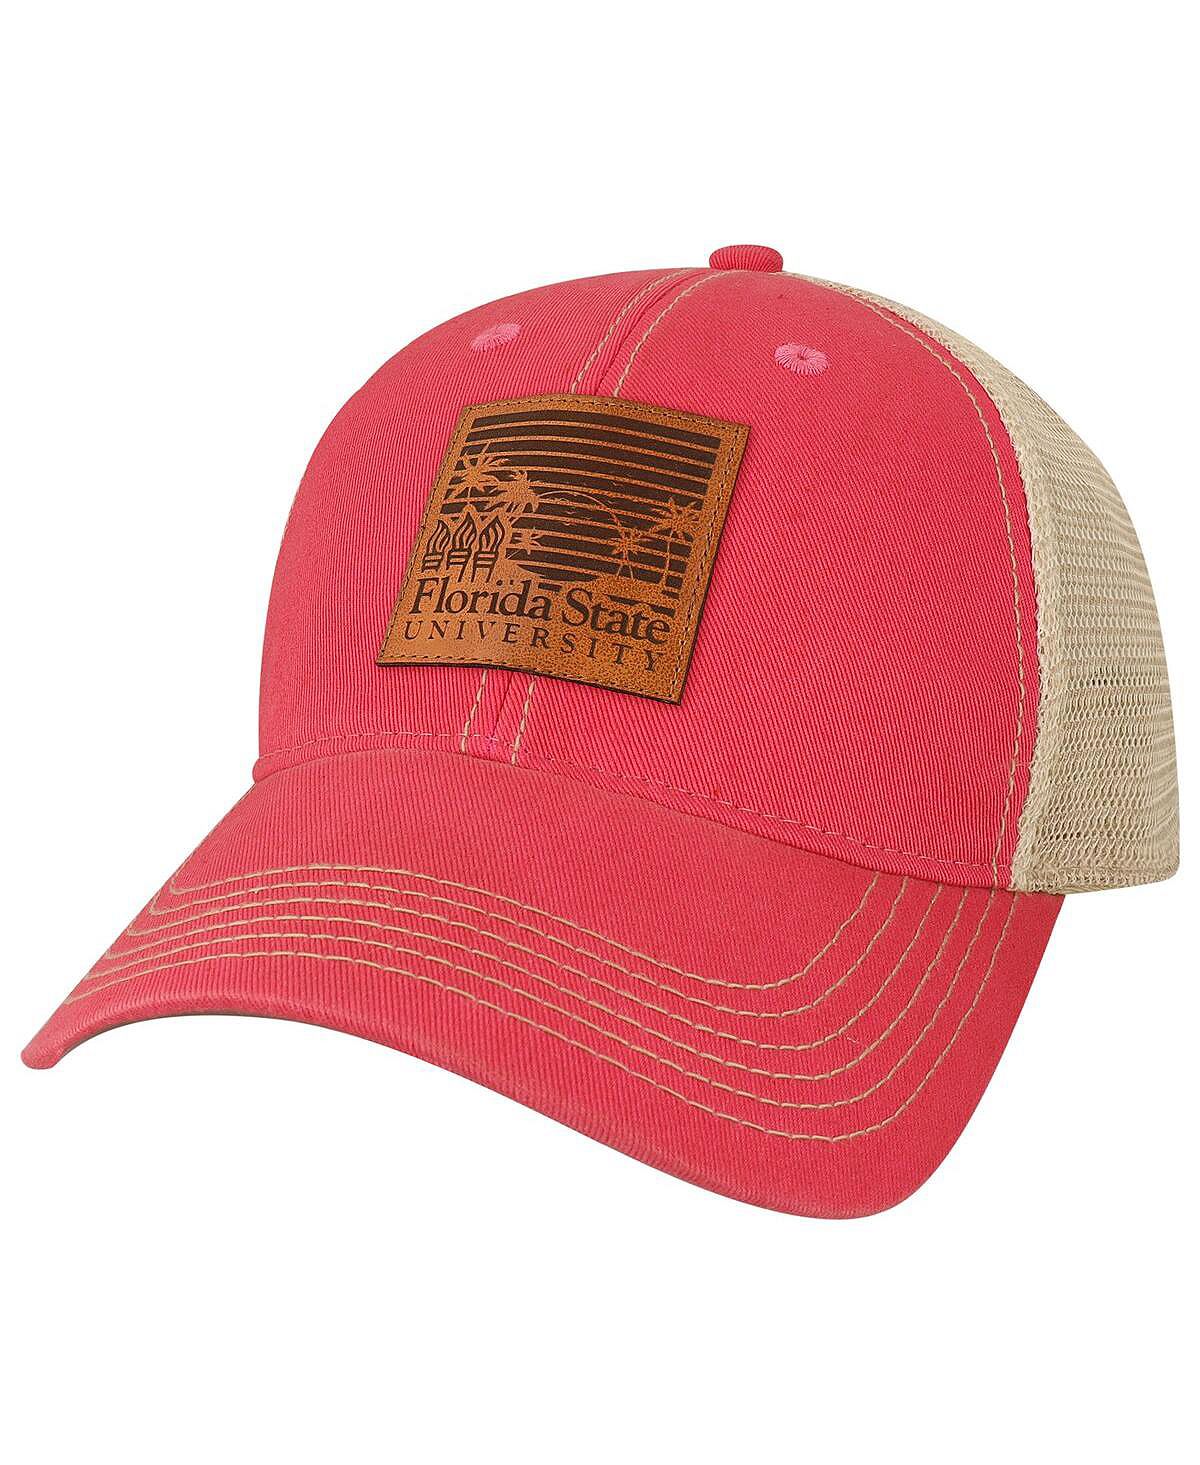 Мужская розовая регулируемая шляпа Snapback Snapback Beach Club Palms, штат Флорида League Collegiate Wear